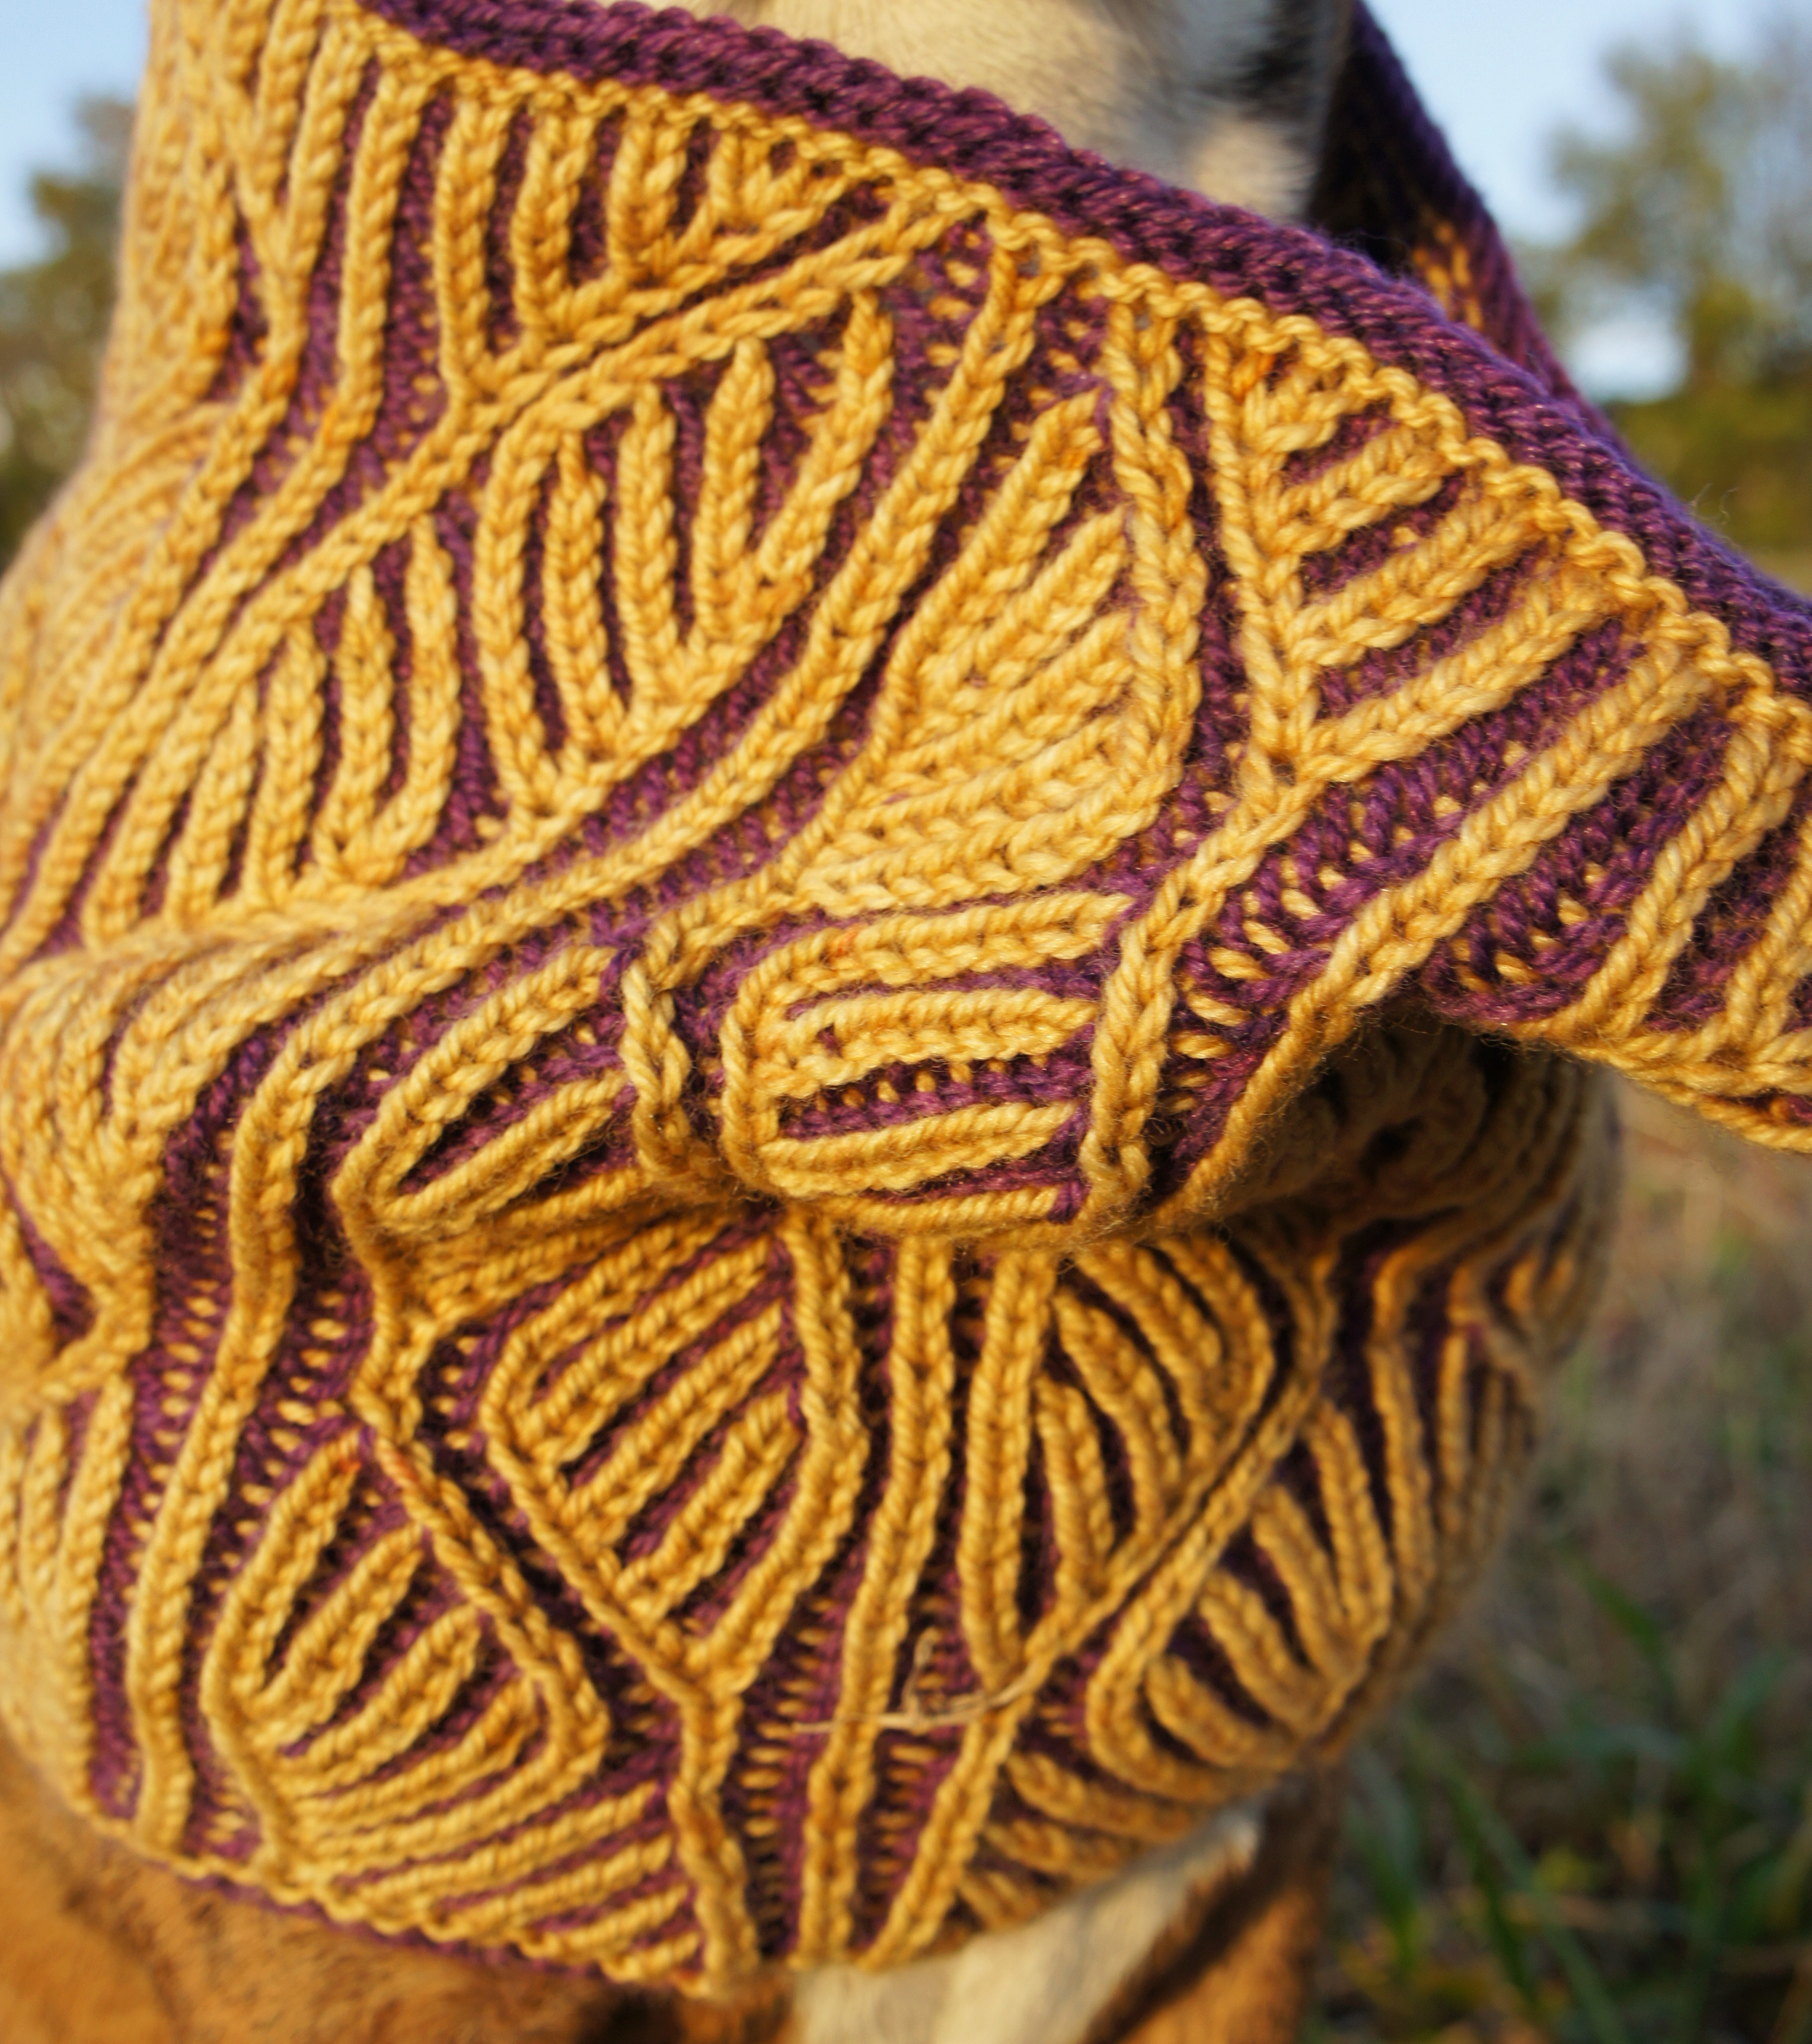 New Brioche Patterns: Zillah and Rhoda « mercedes knits